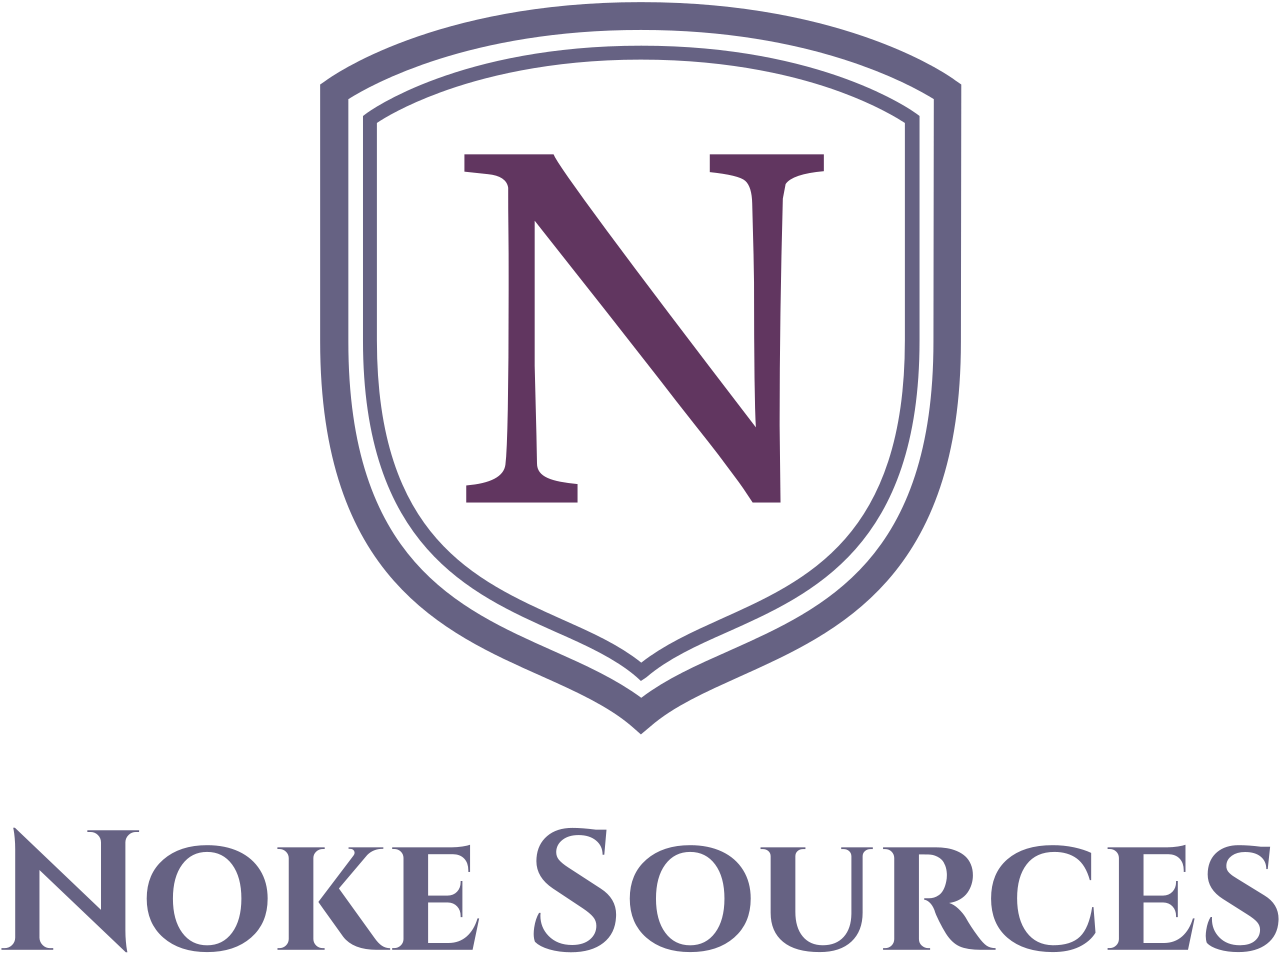 Noke Sources's web page